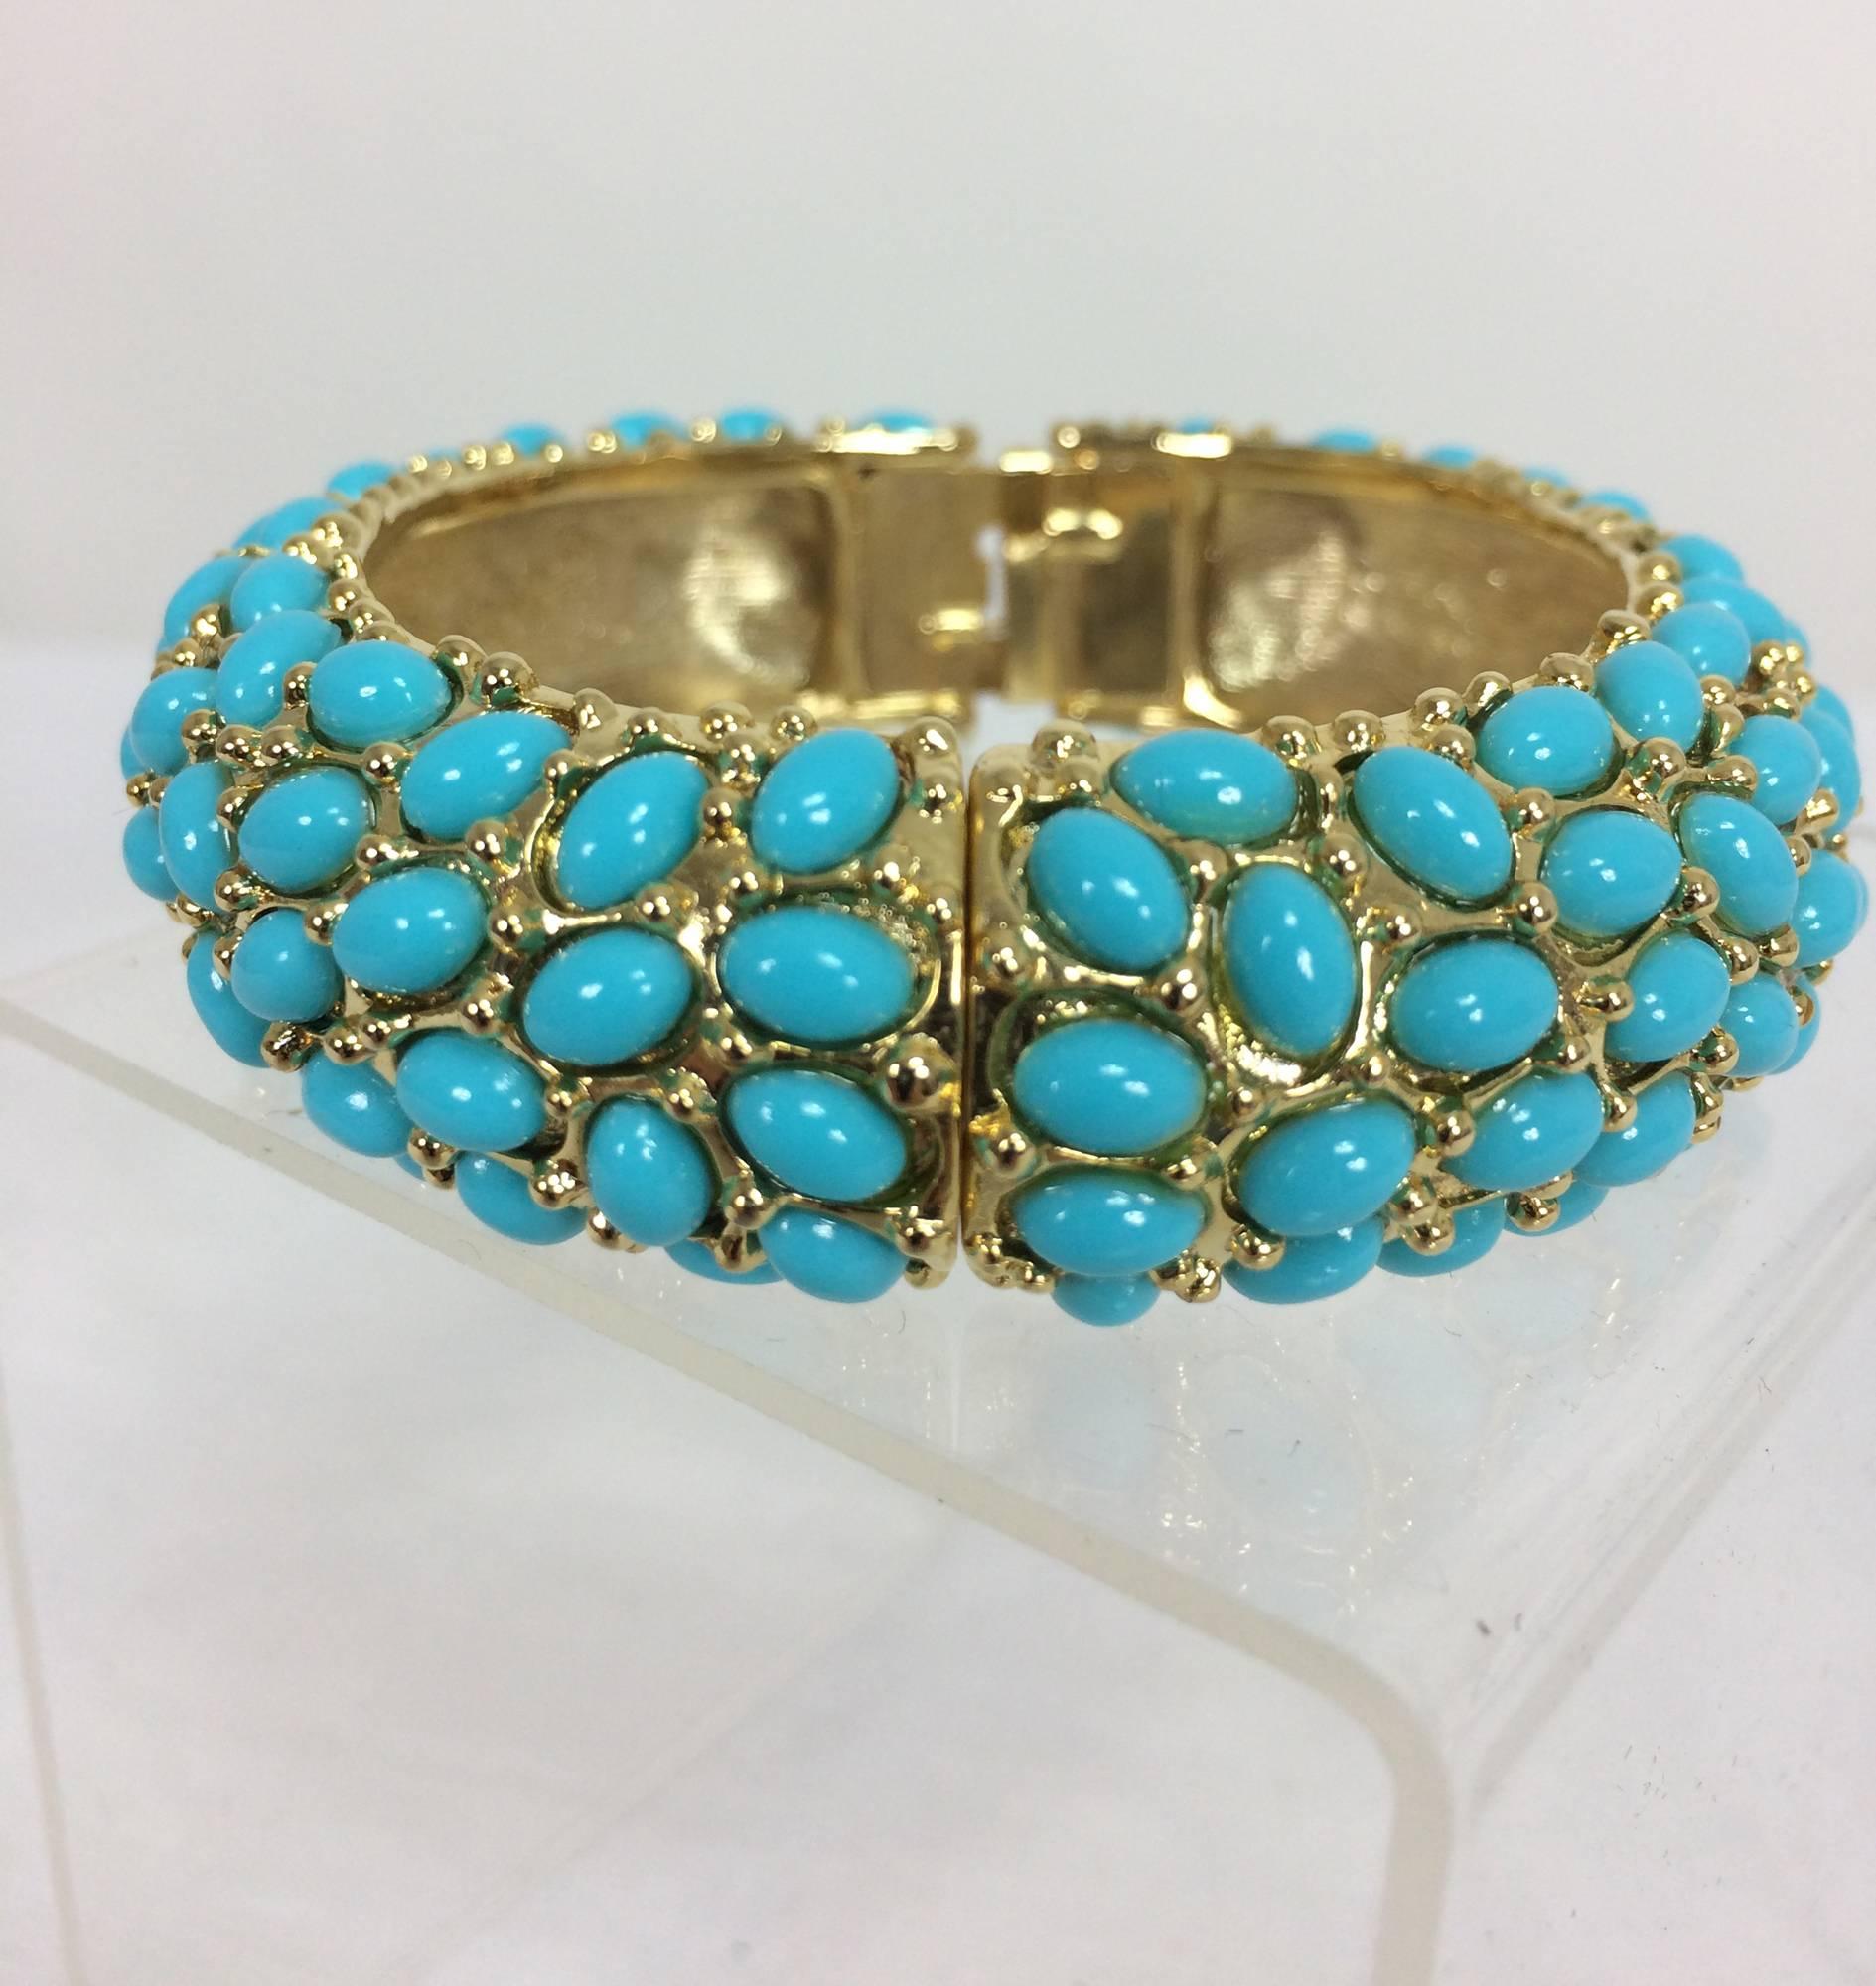 Kenneth Lane turquoise cabochon encrusted gold clamper bracelet. Approximately 3/4